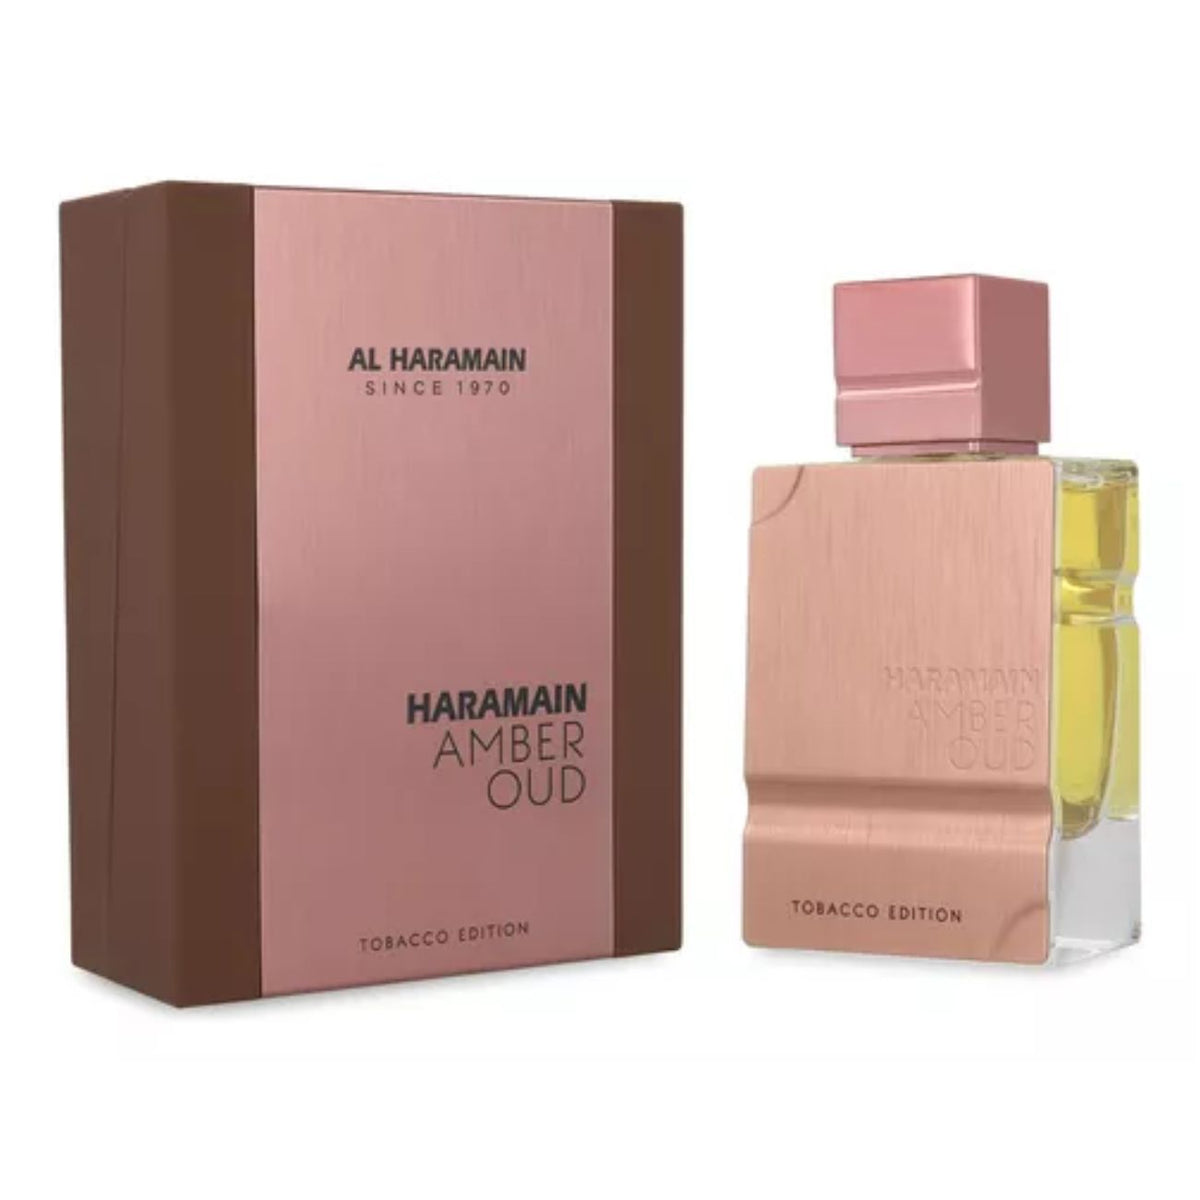 Perfume Al Haramain unisex Amber oud tabacco edition EDP60ml